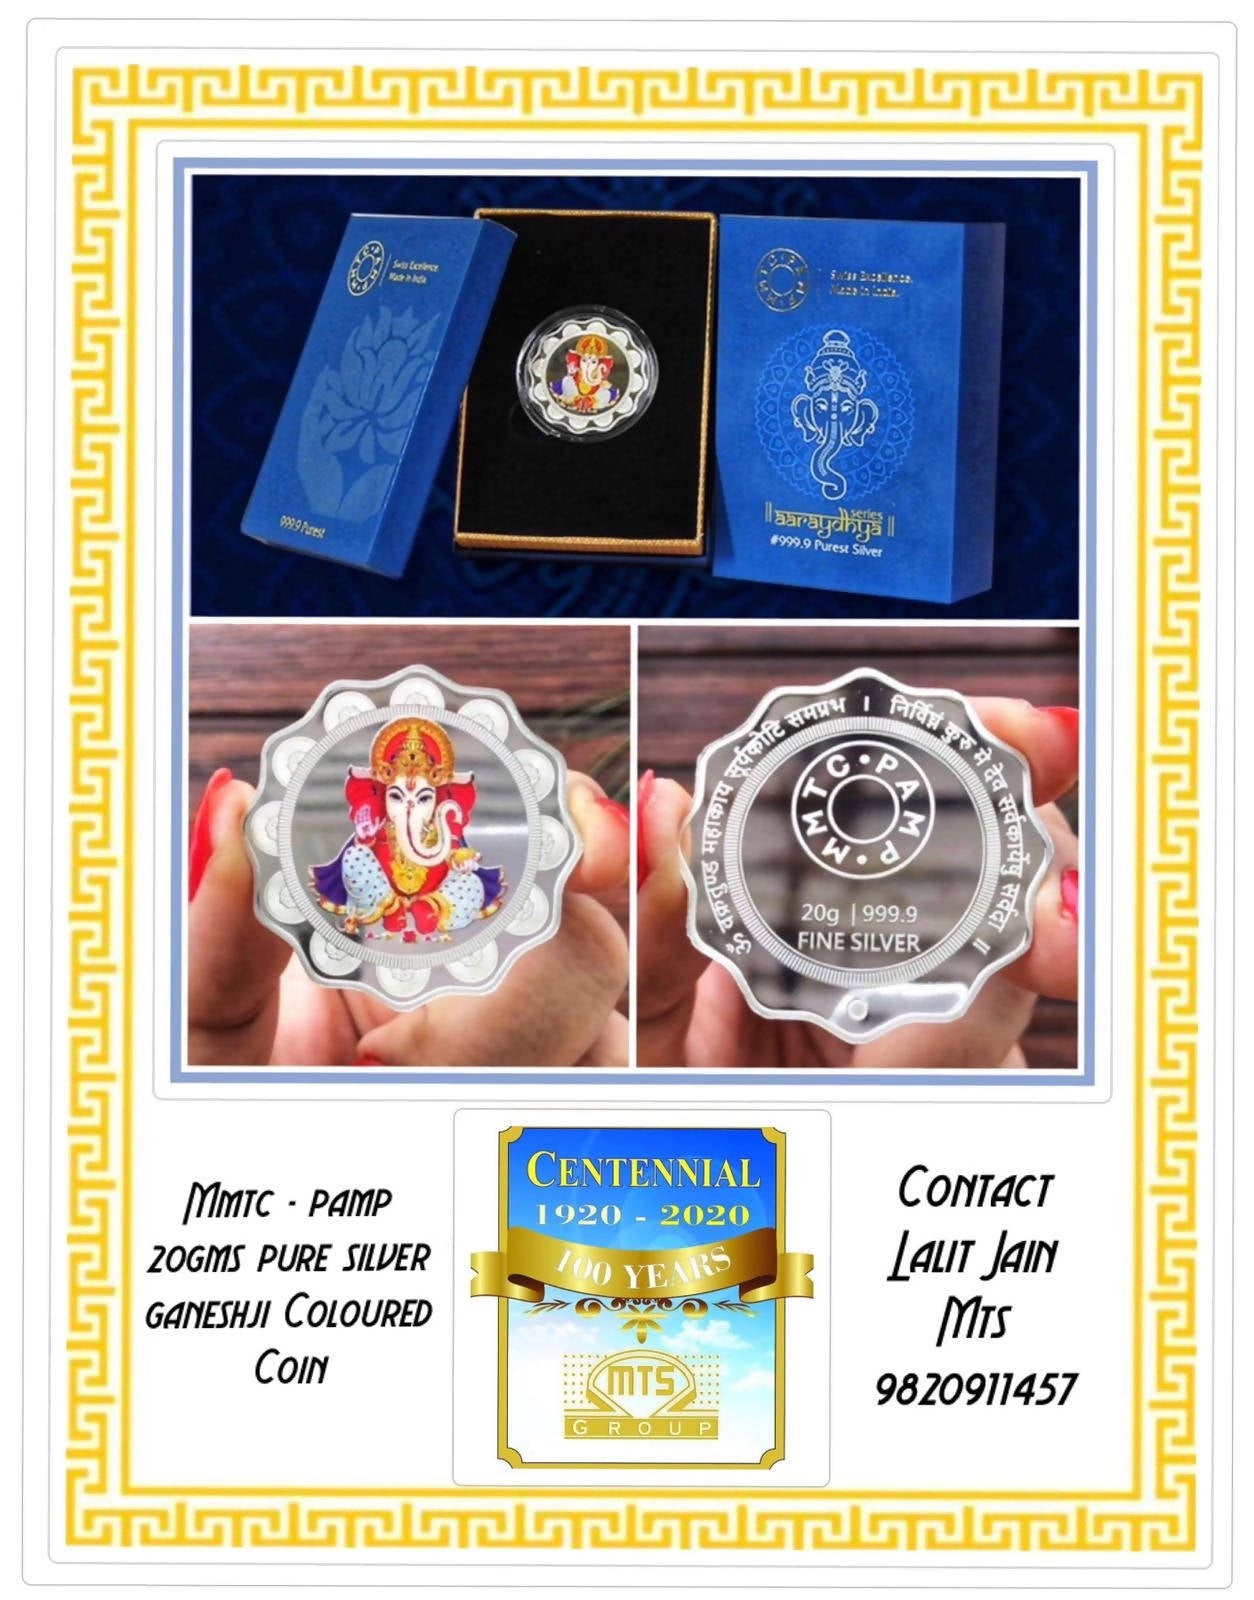 MMTC - Pamp 20gms Pure Silver Ganeshji Coloured Coin Sarafa Bazar India